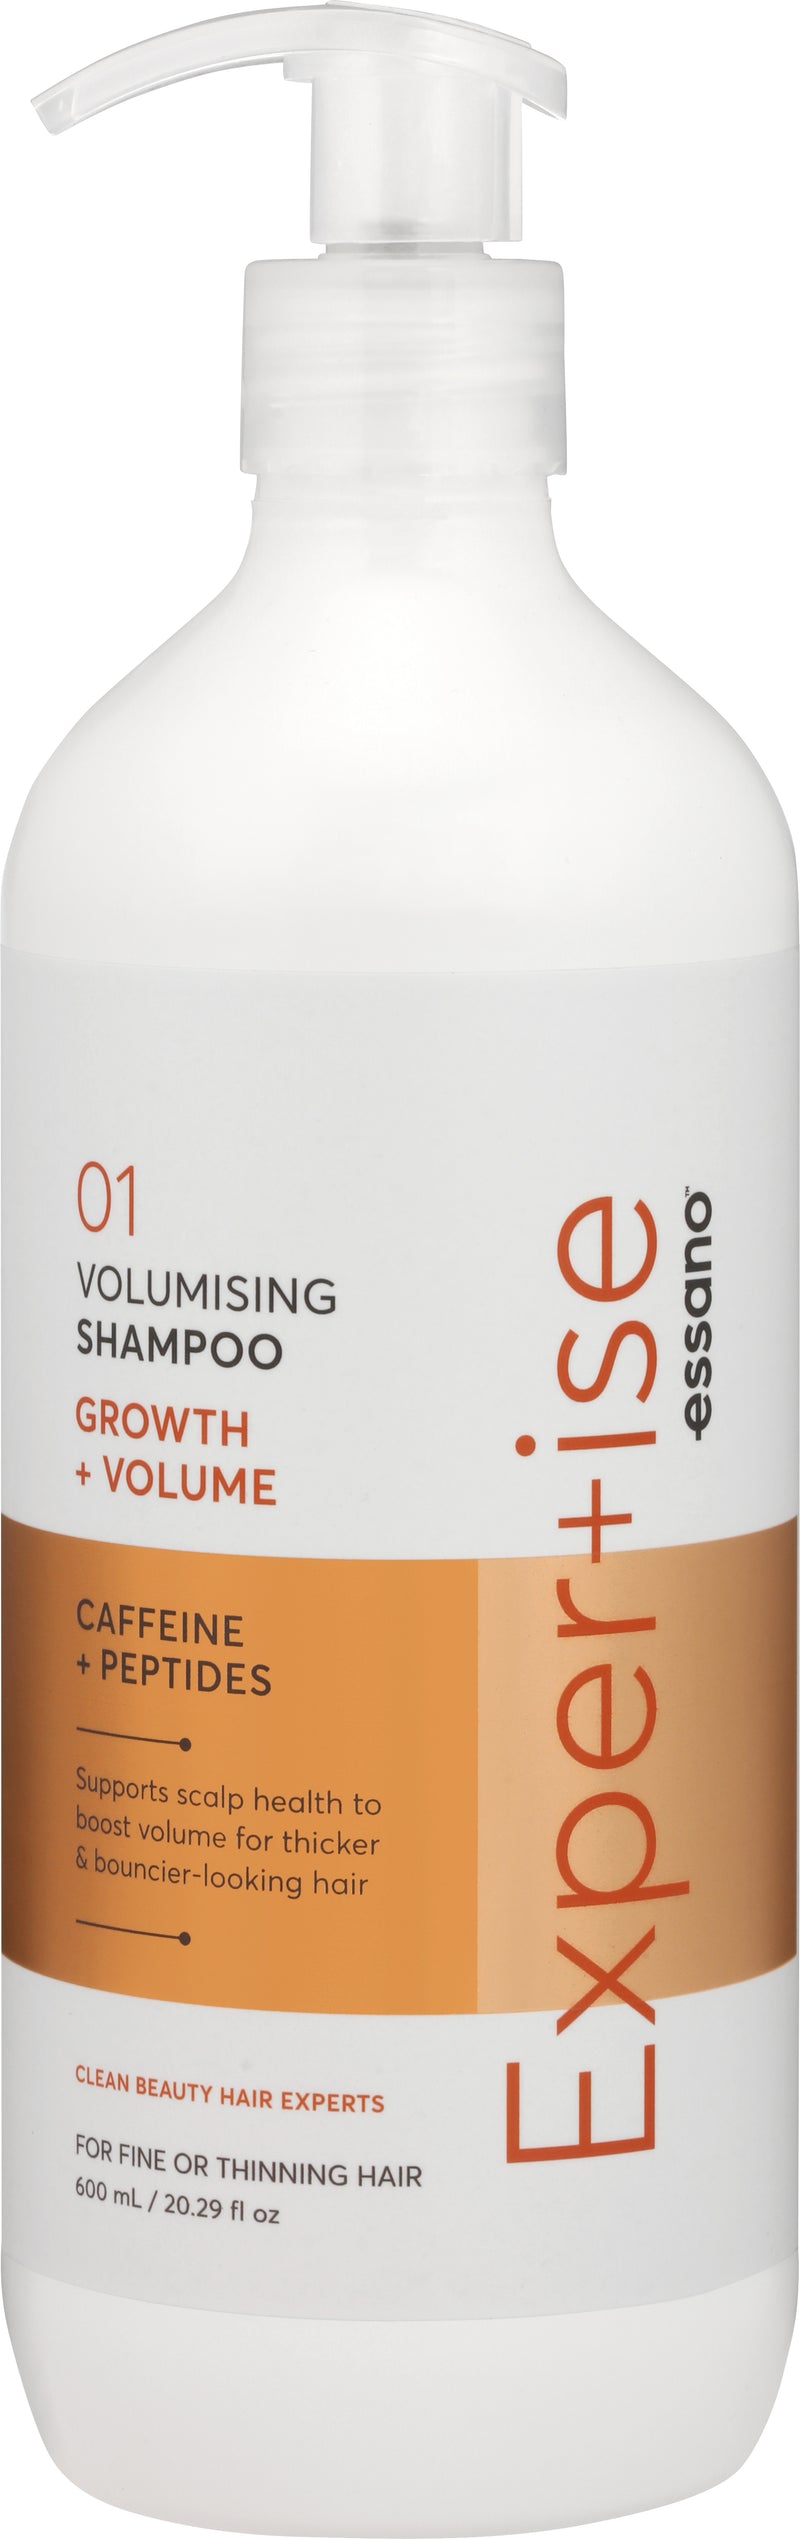 Essano Expertise Volumising Growth Shampoo 600ml